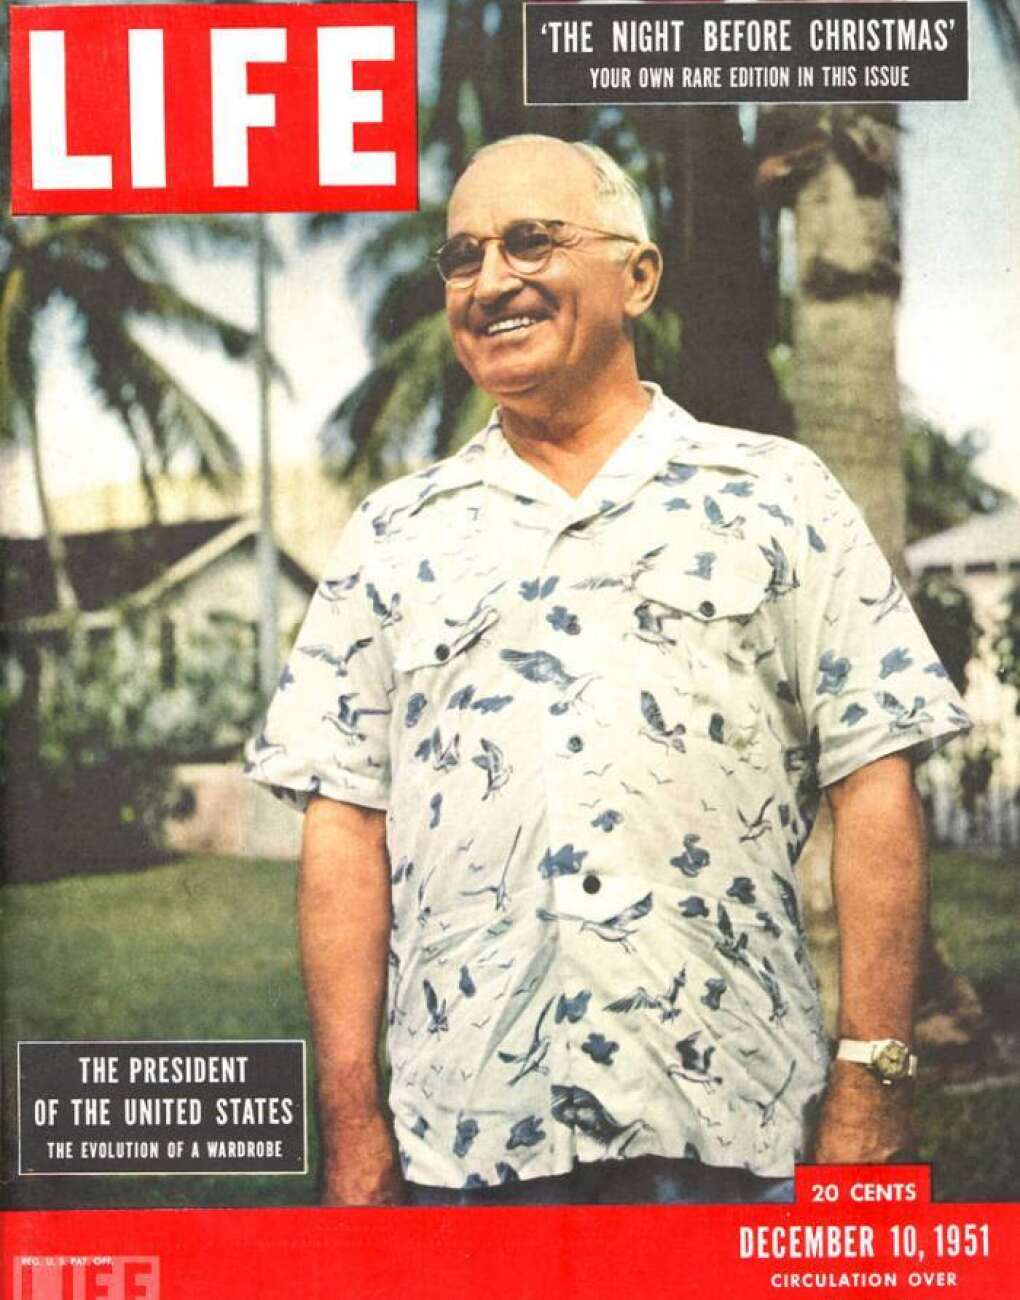 President Harry Truman visiting his Key West Little White House